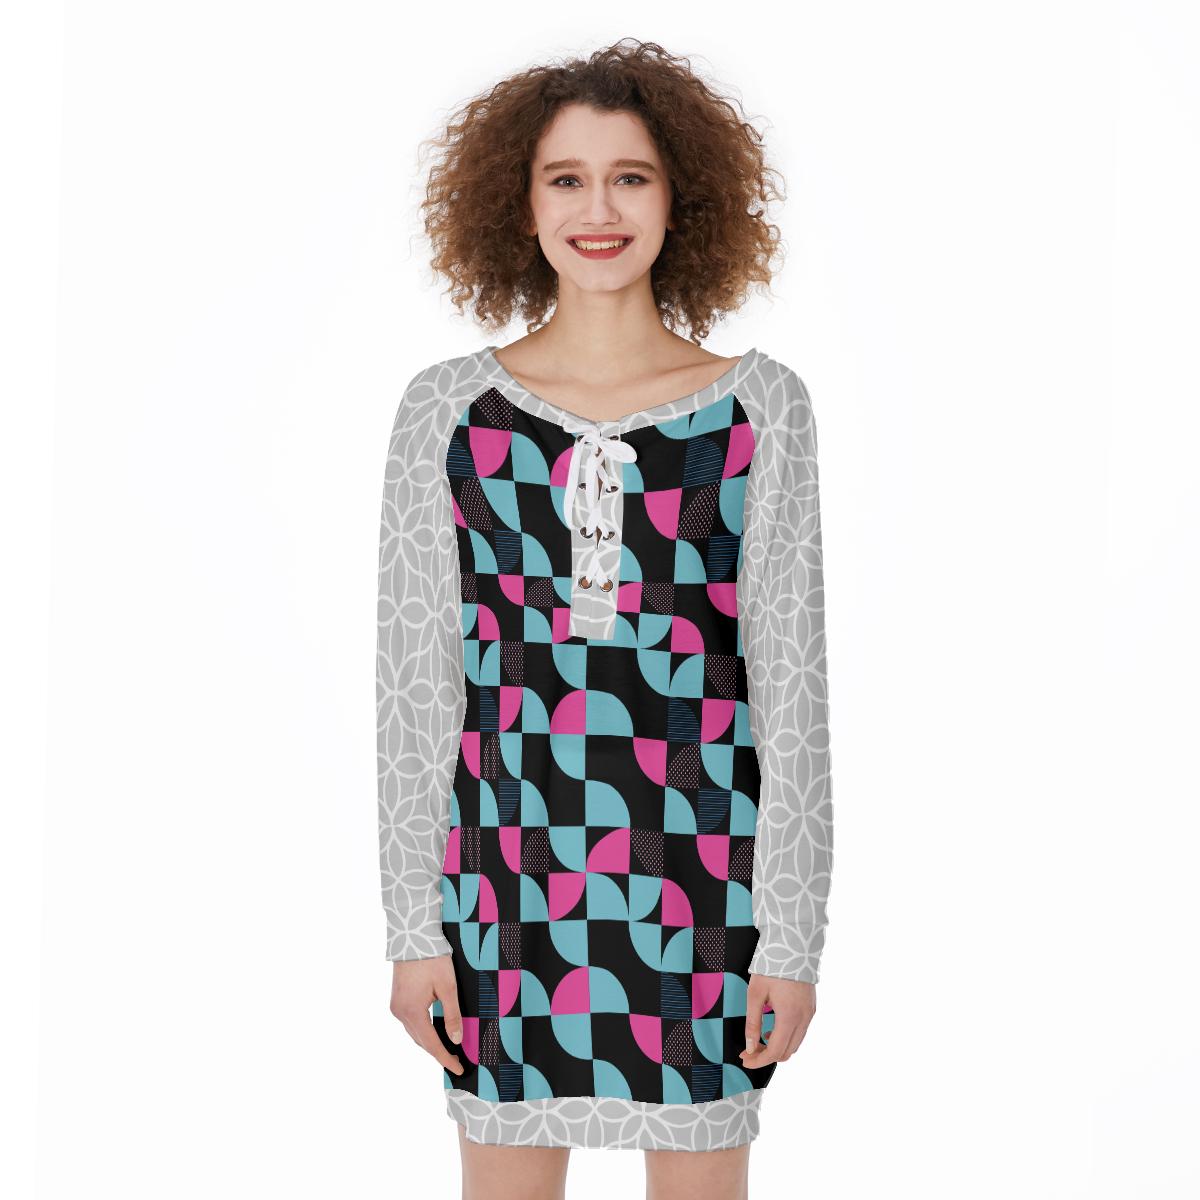 Abstract Geometric Shapes Print Women's Lace-Up Sweatshirt